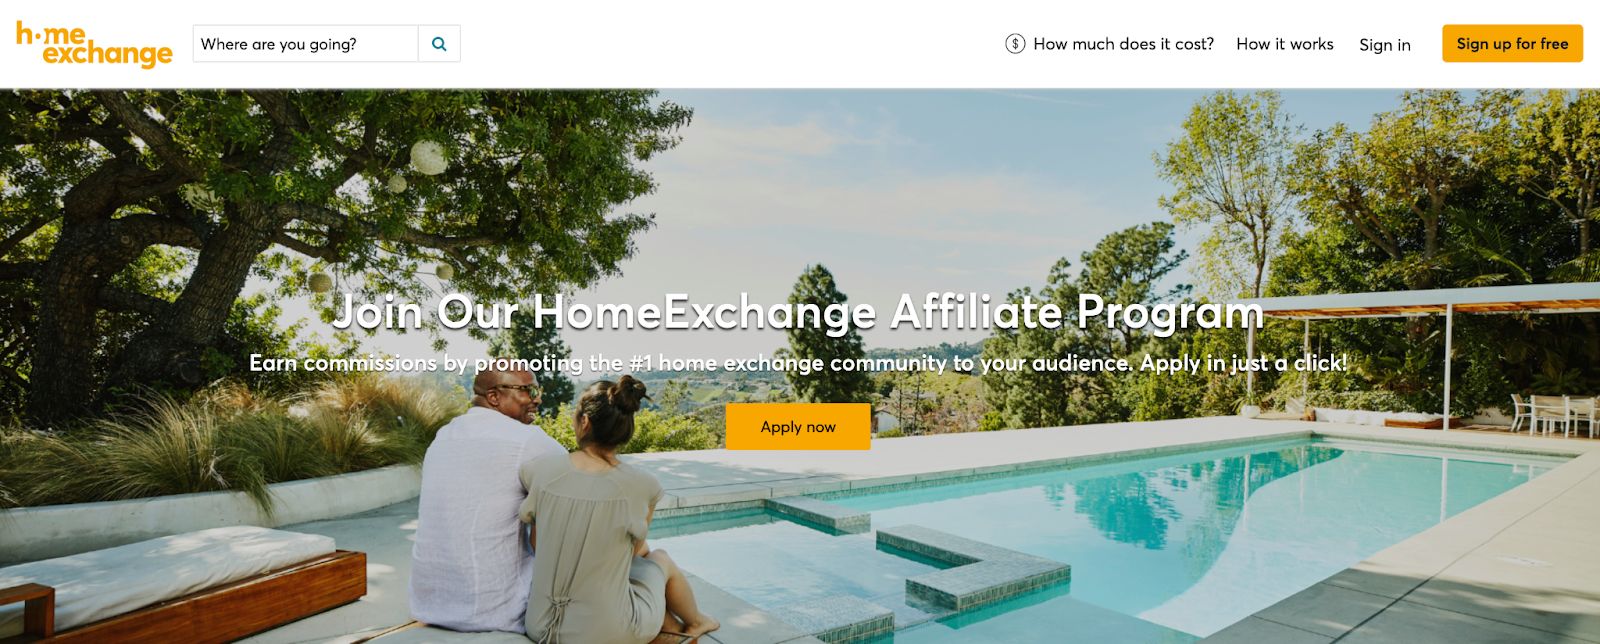 HomeExchange affiliate program page